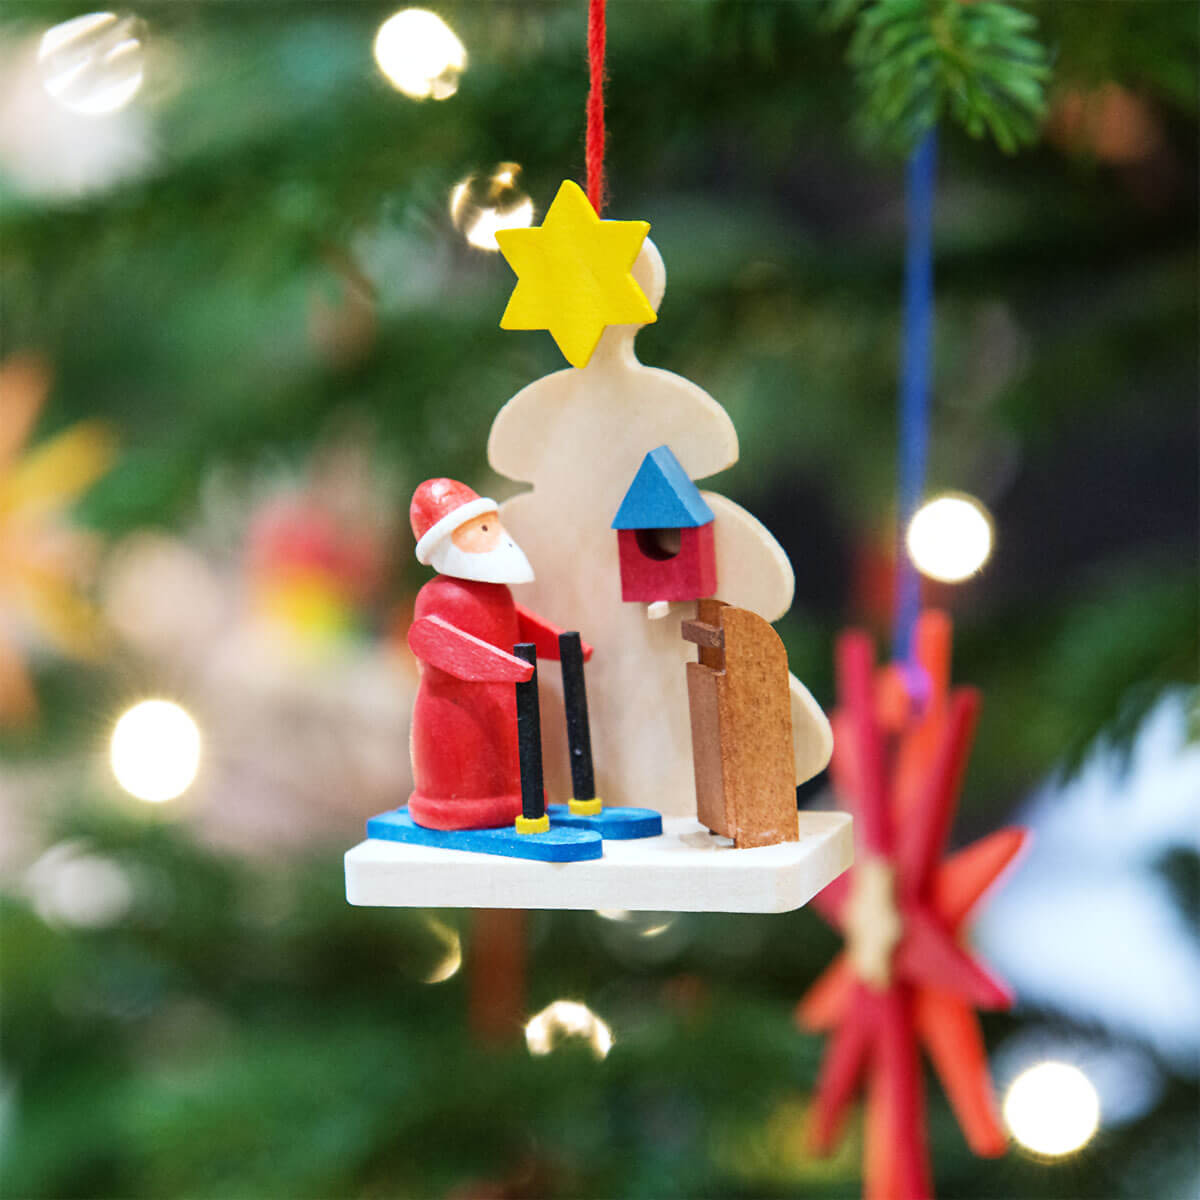 Tree 'Santa Claus' Ornament with christmas pyramid